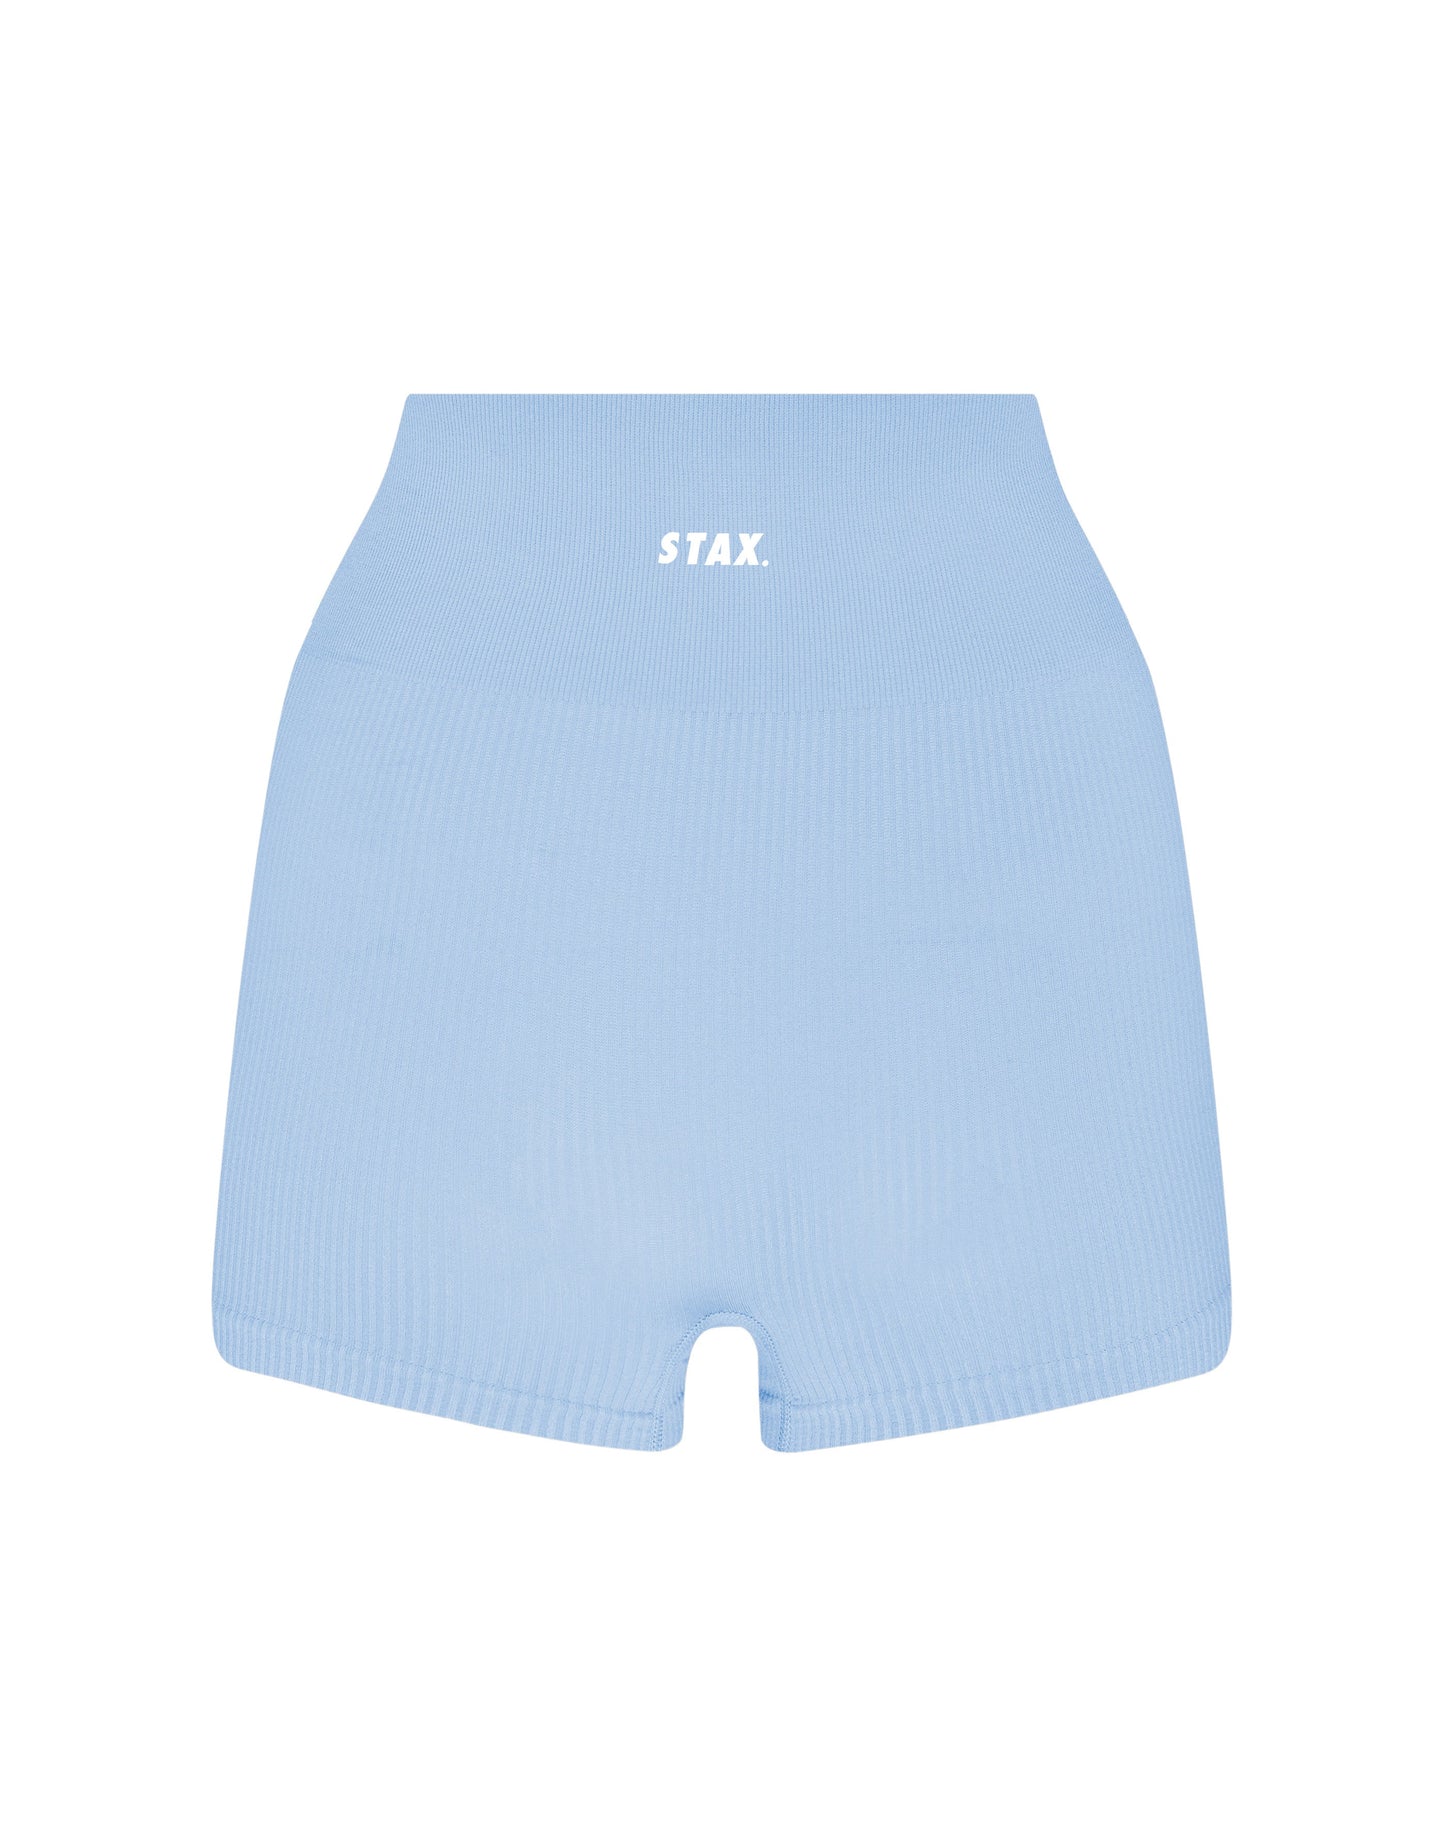 STAX. Premium Seamless V5.1 (Favourites) Mini Lounge Shorts - Baby Blue